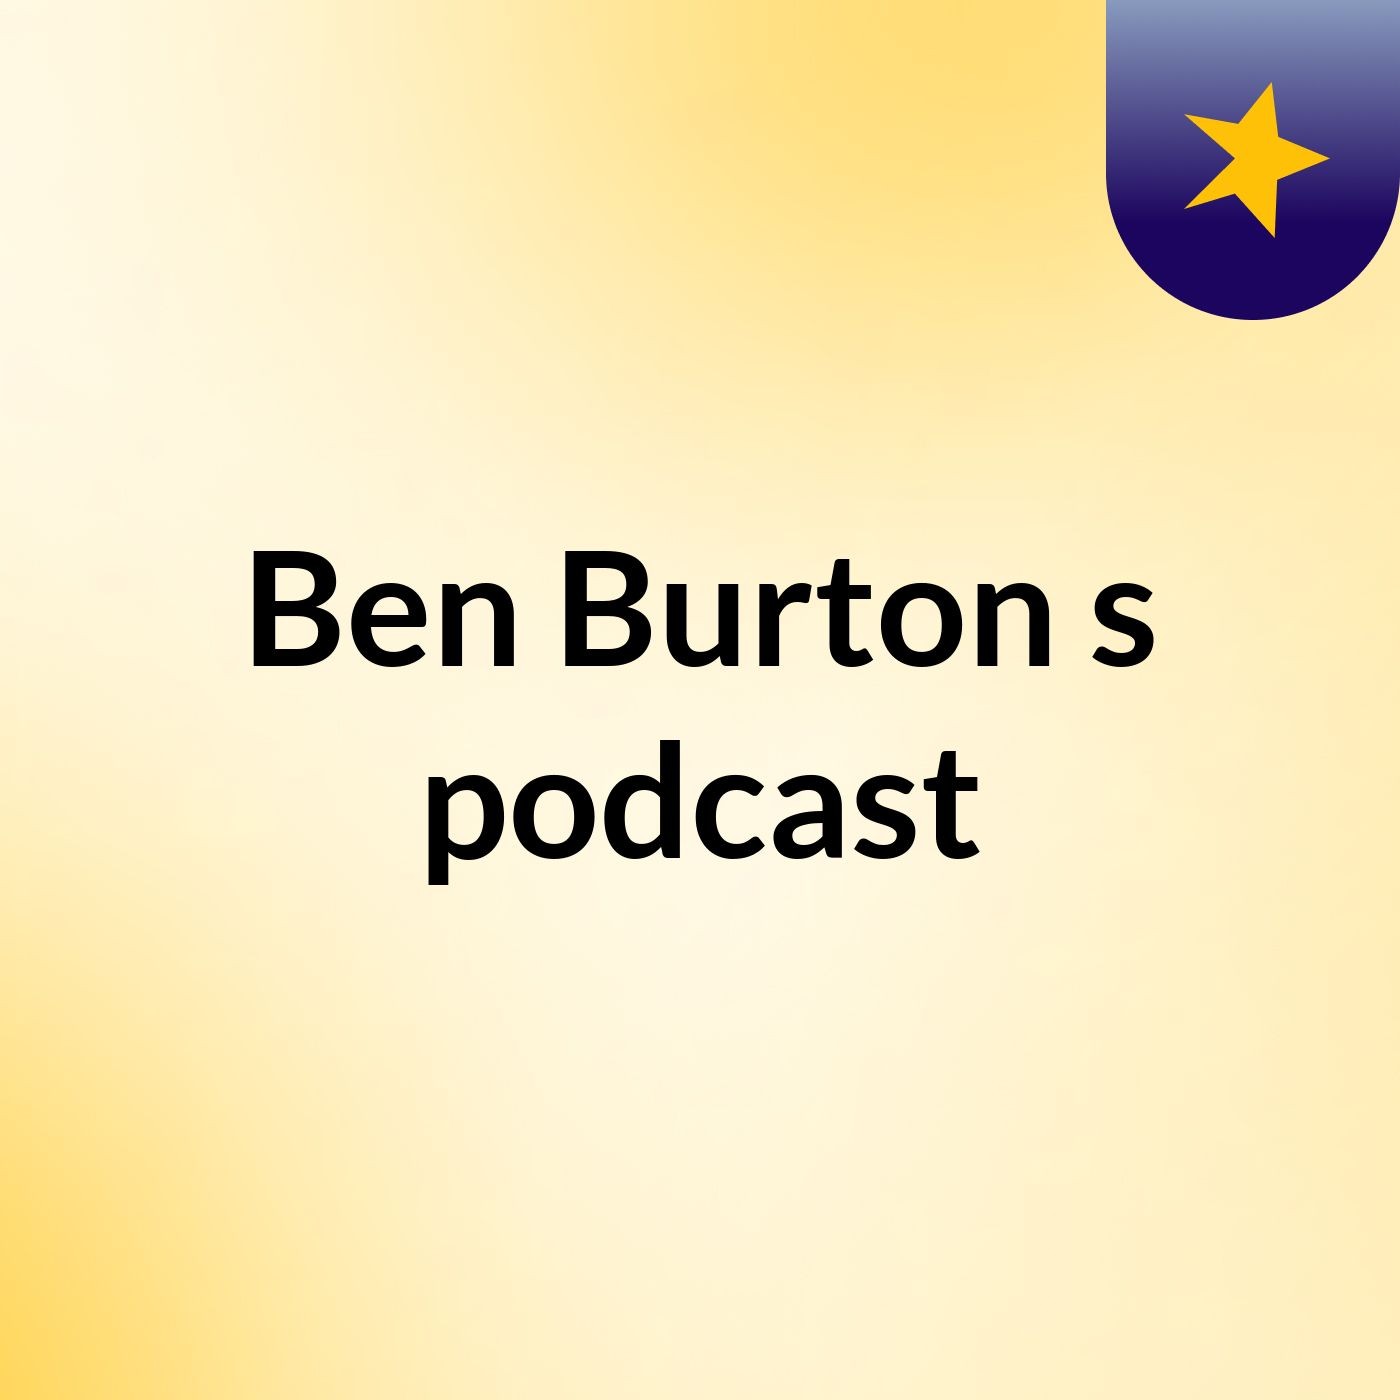 Ben Burton's podcast